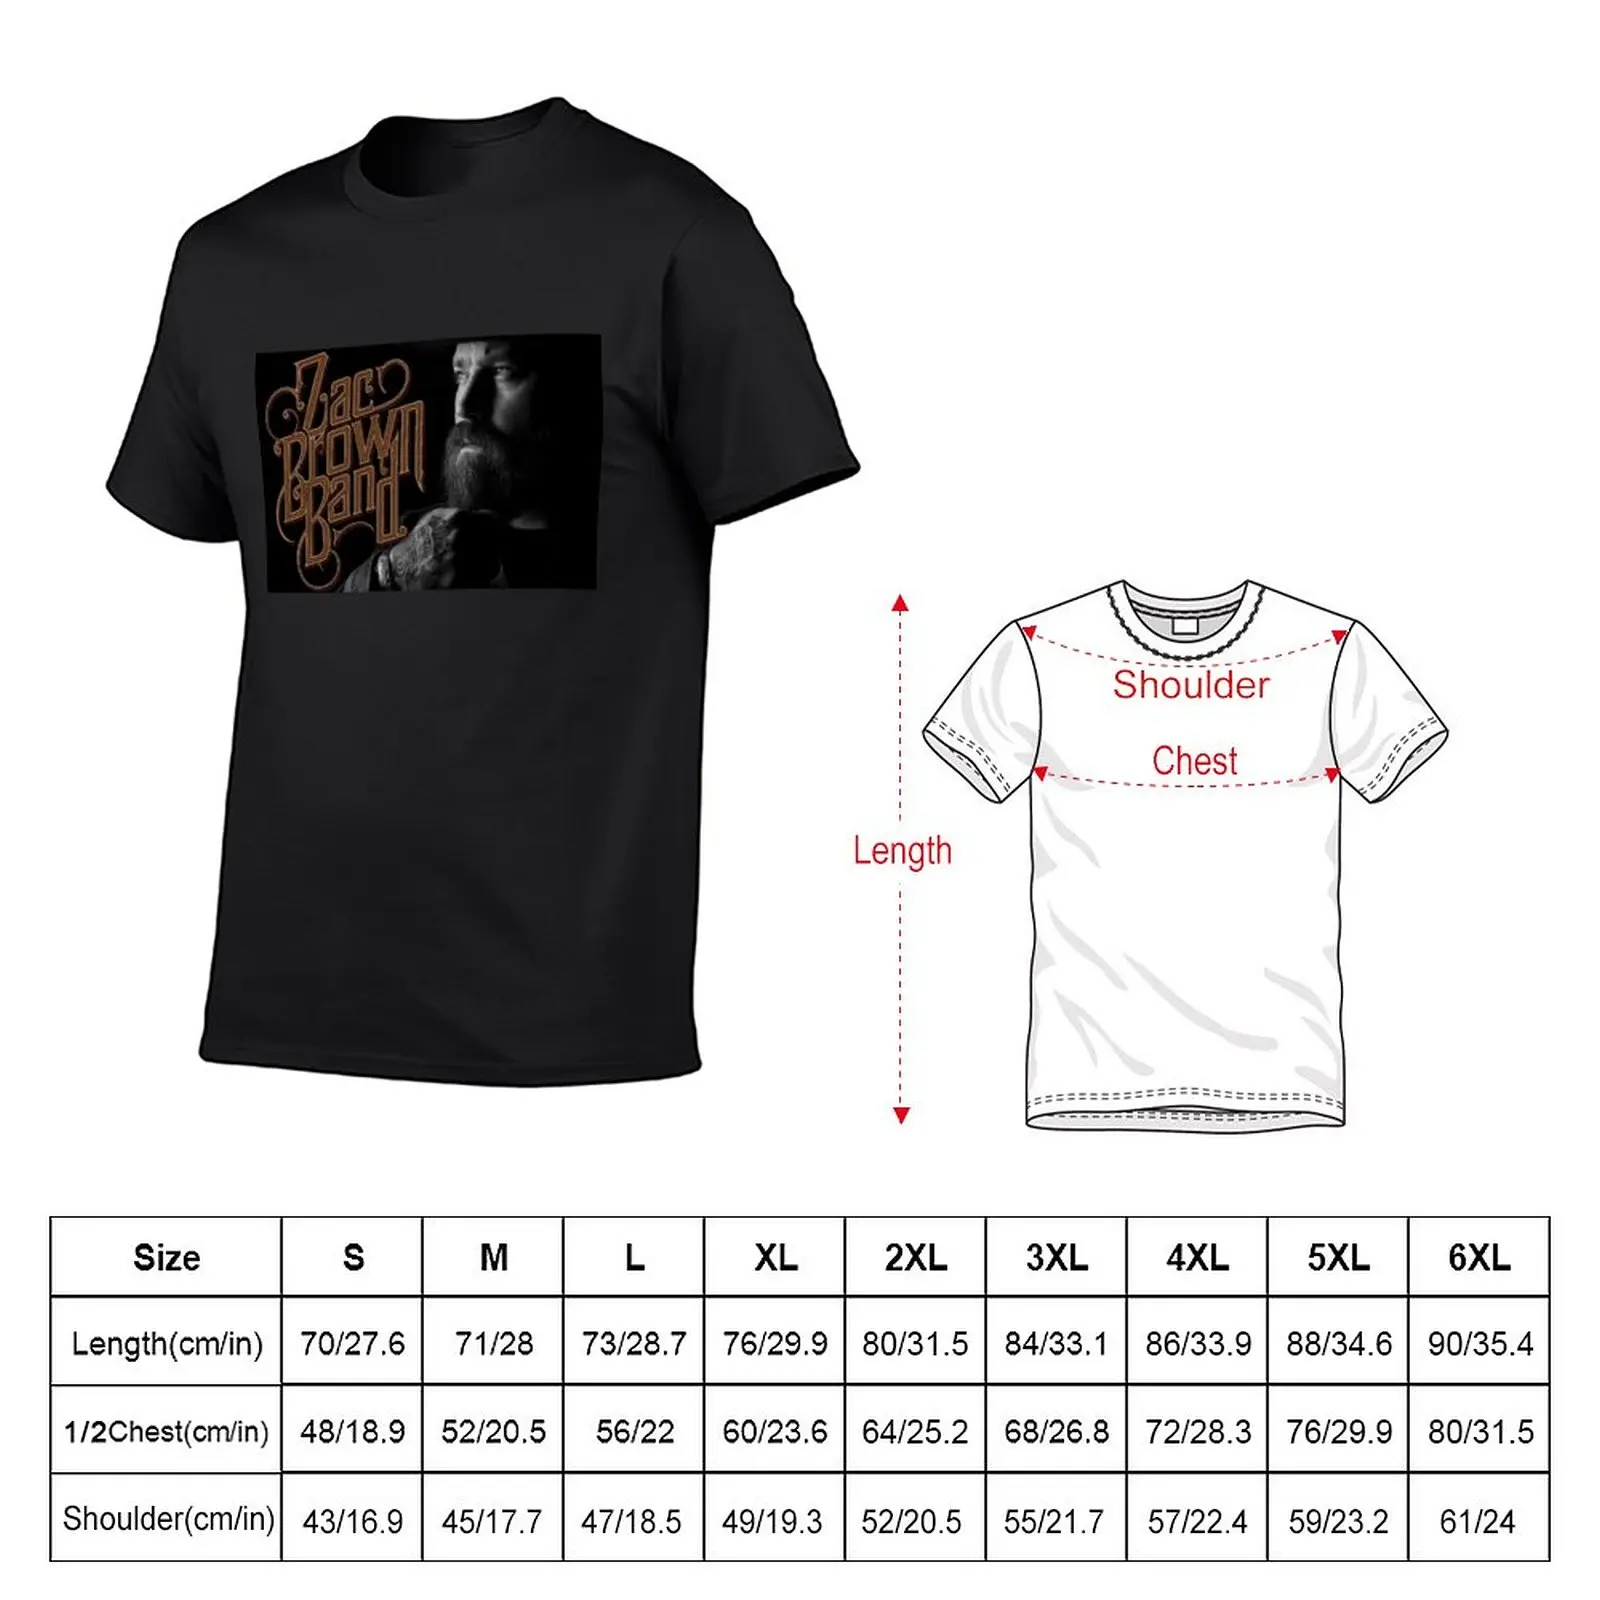 Novo zac orcamentos utilizando a tecnica de jack brown banda 2019 nirmala T-Shirt estética roupas simples t-shirt personalizada t-shirt dos Homens t-shirts